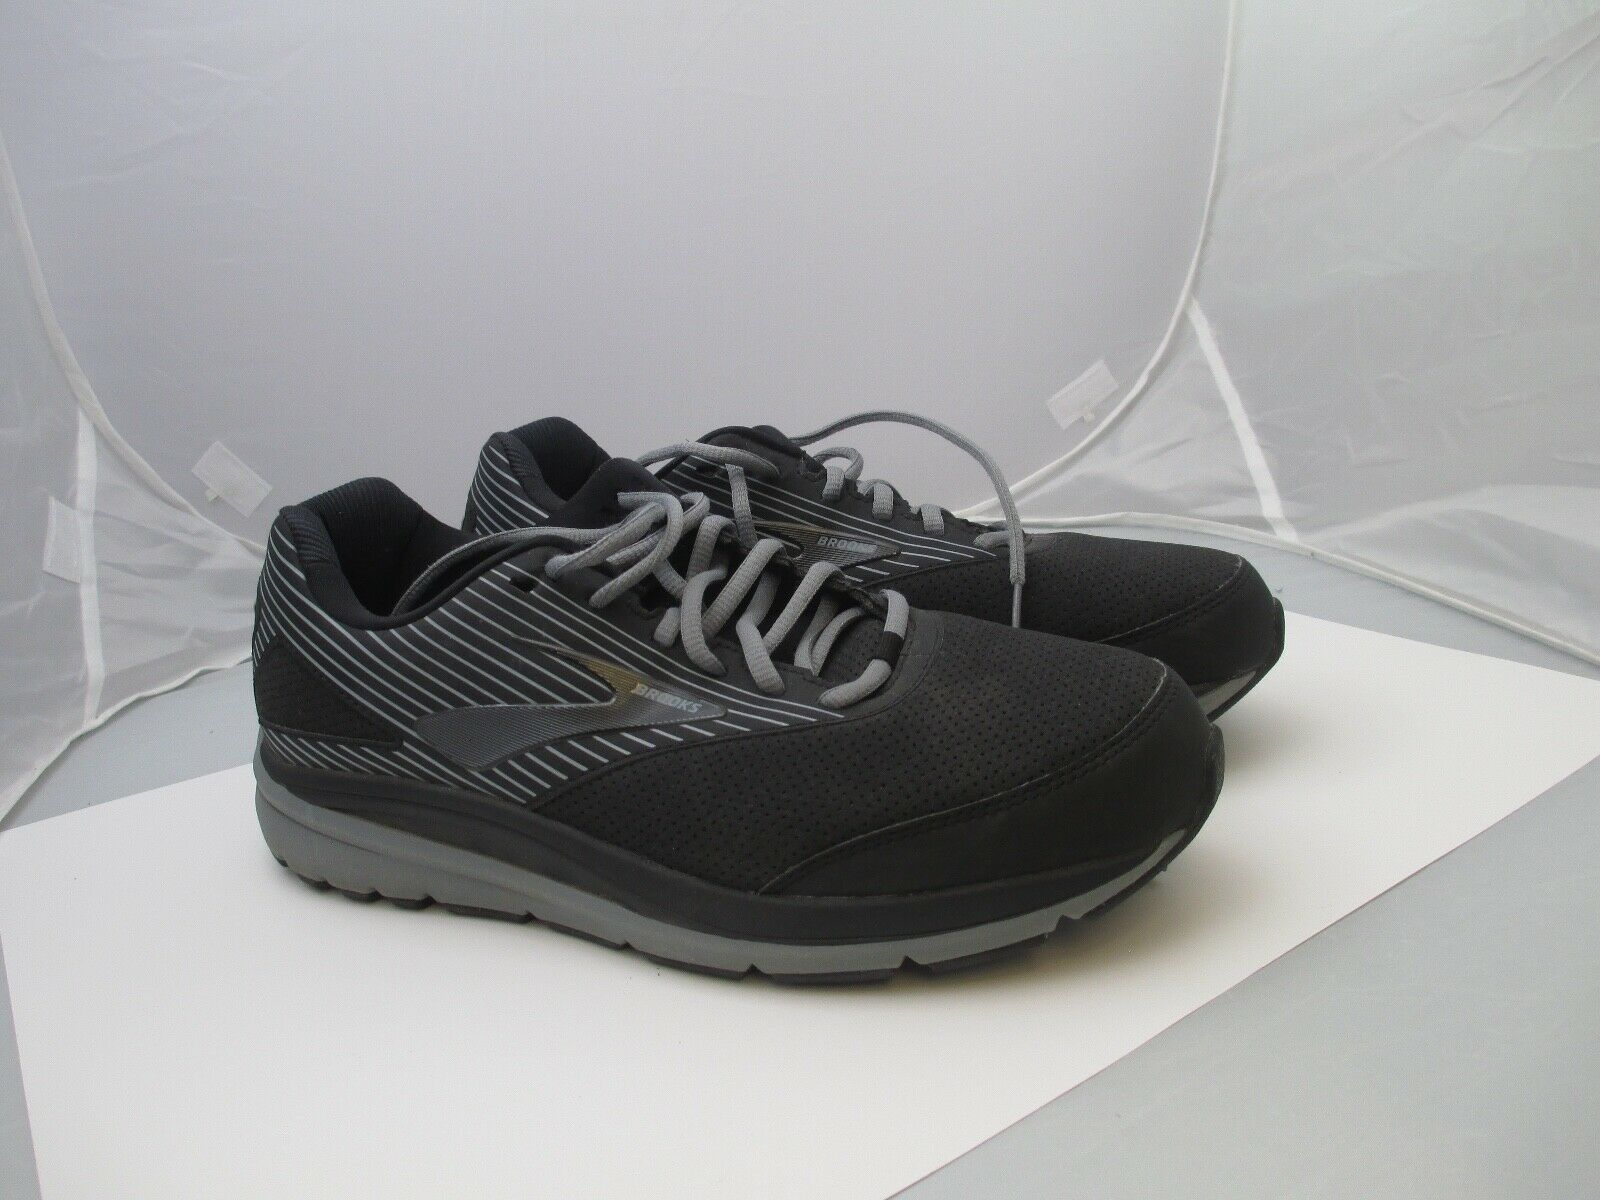 Brooks Men’s 11 Addiction Walker Walking Shoes Missing inserts